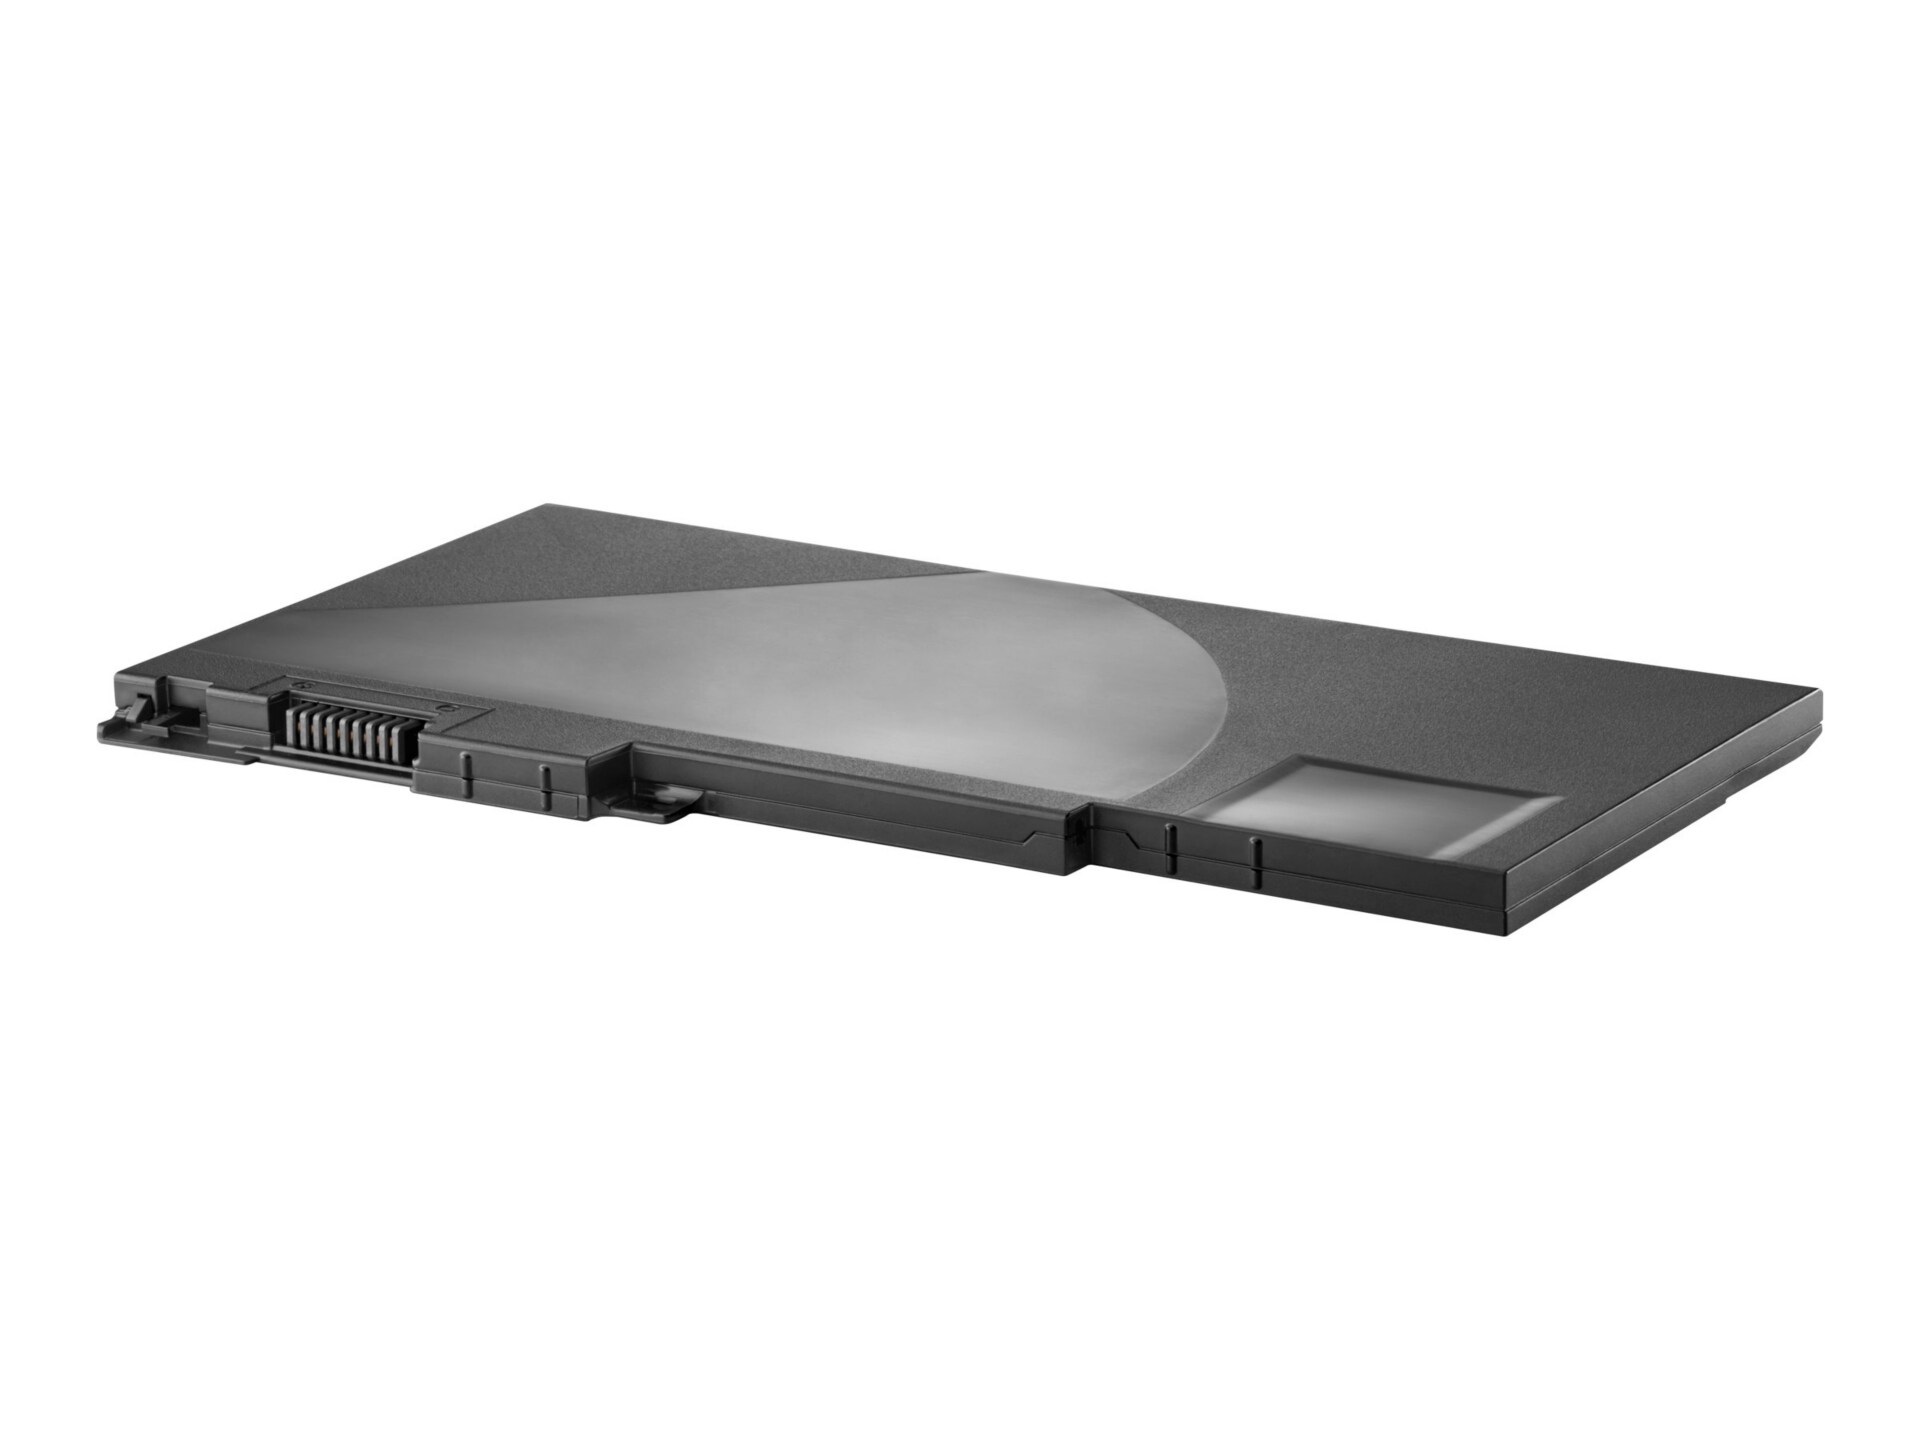 HP CM03XL - notebook battery - Li-pol - 4504 mAh